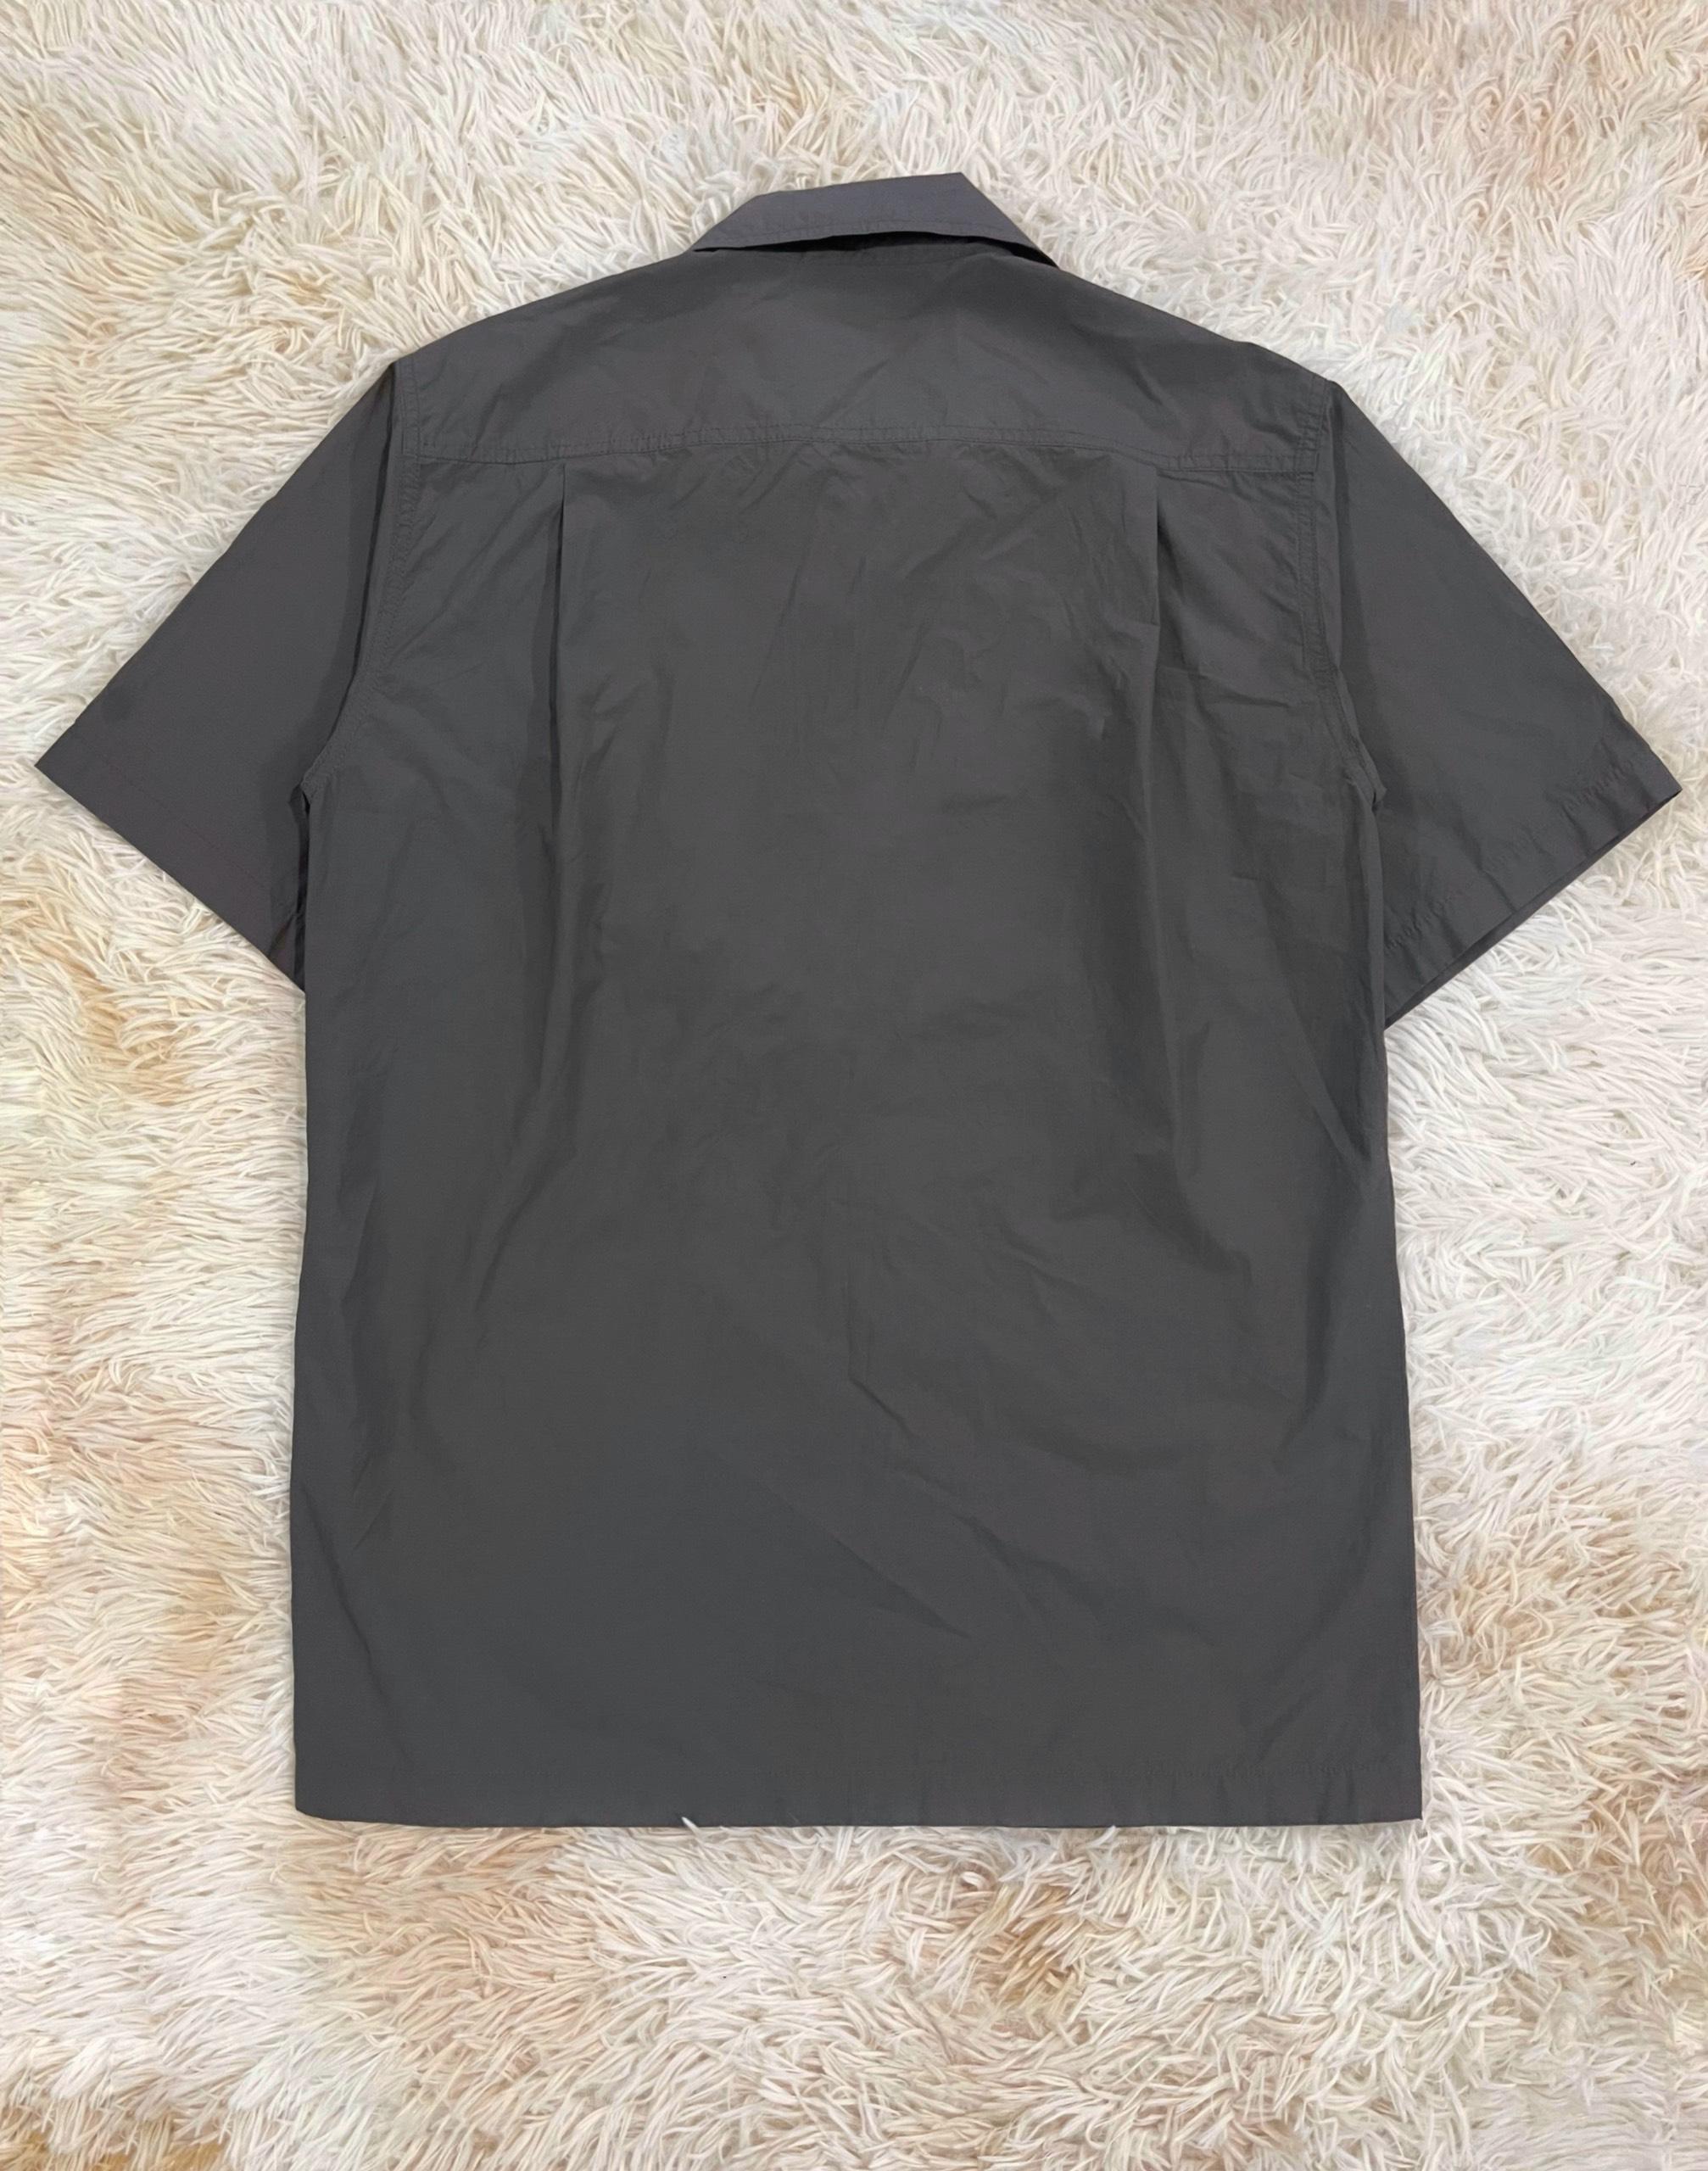 Hyein Seo S/S2018 Smoker Shirt In Good Condition For Sale In Tương Mai Ward, Hoang Mai District